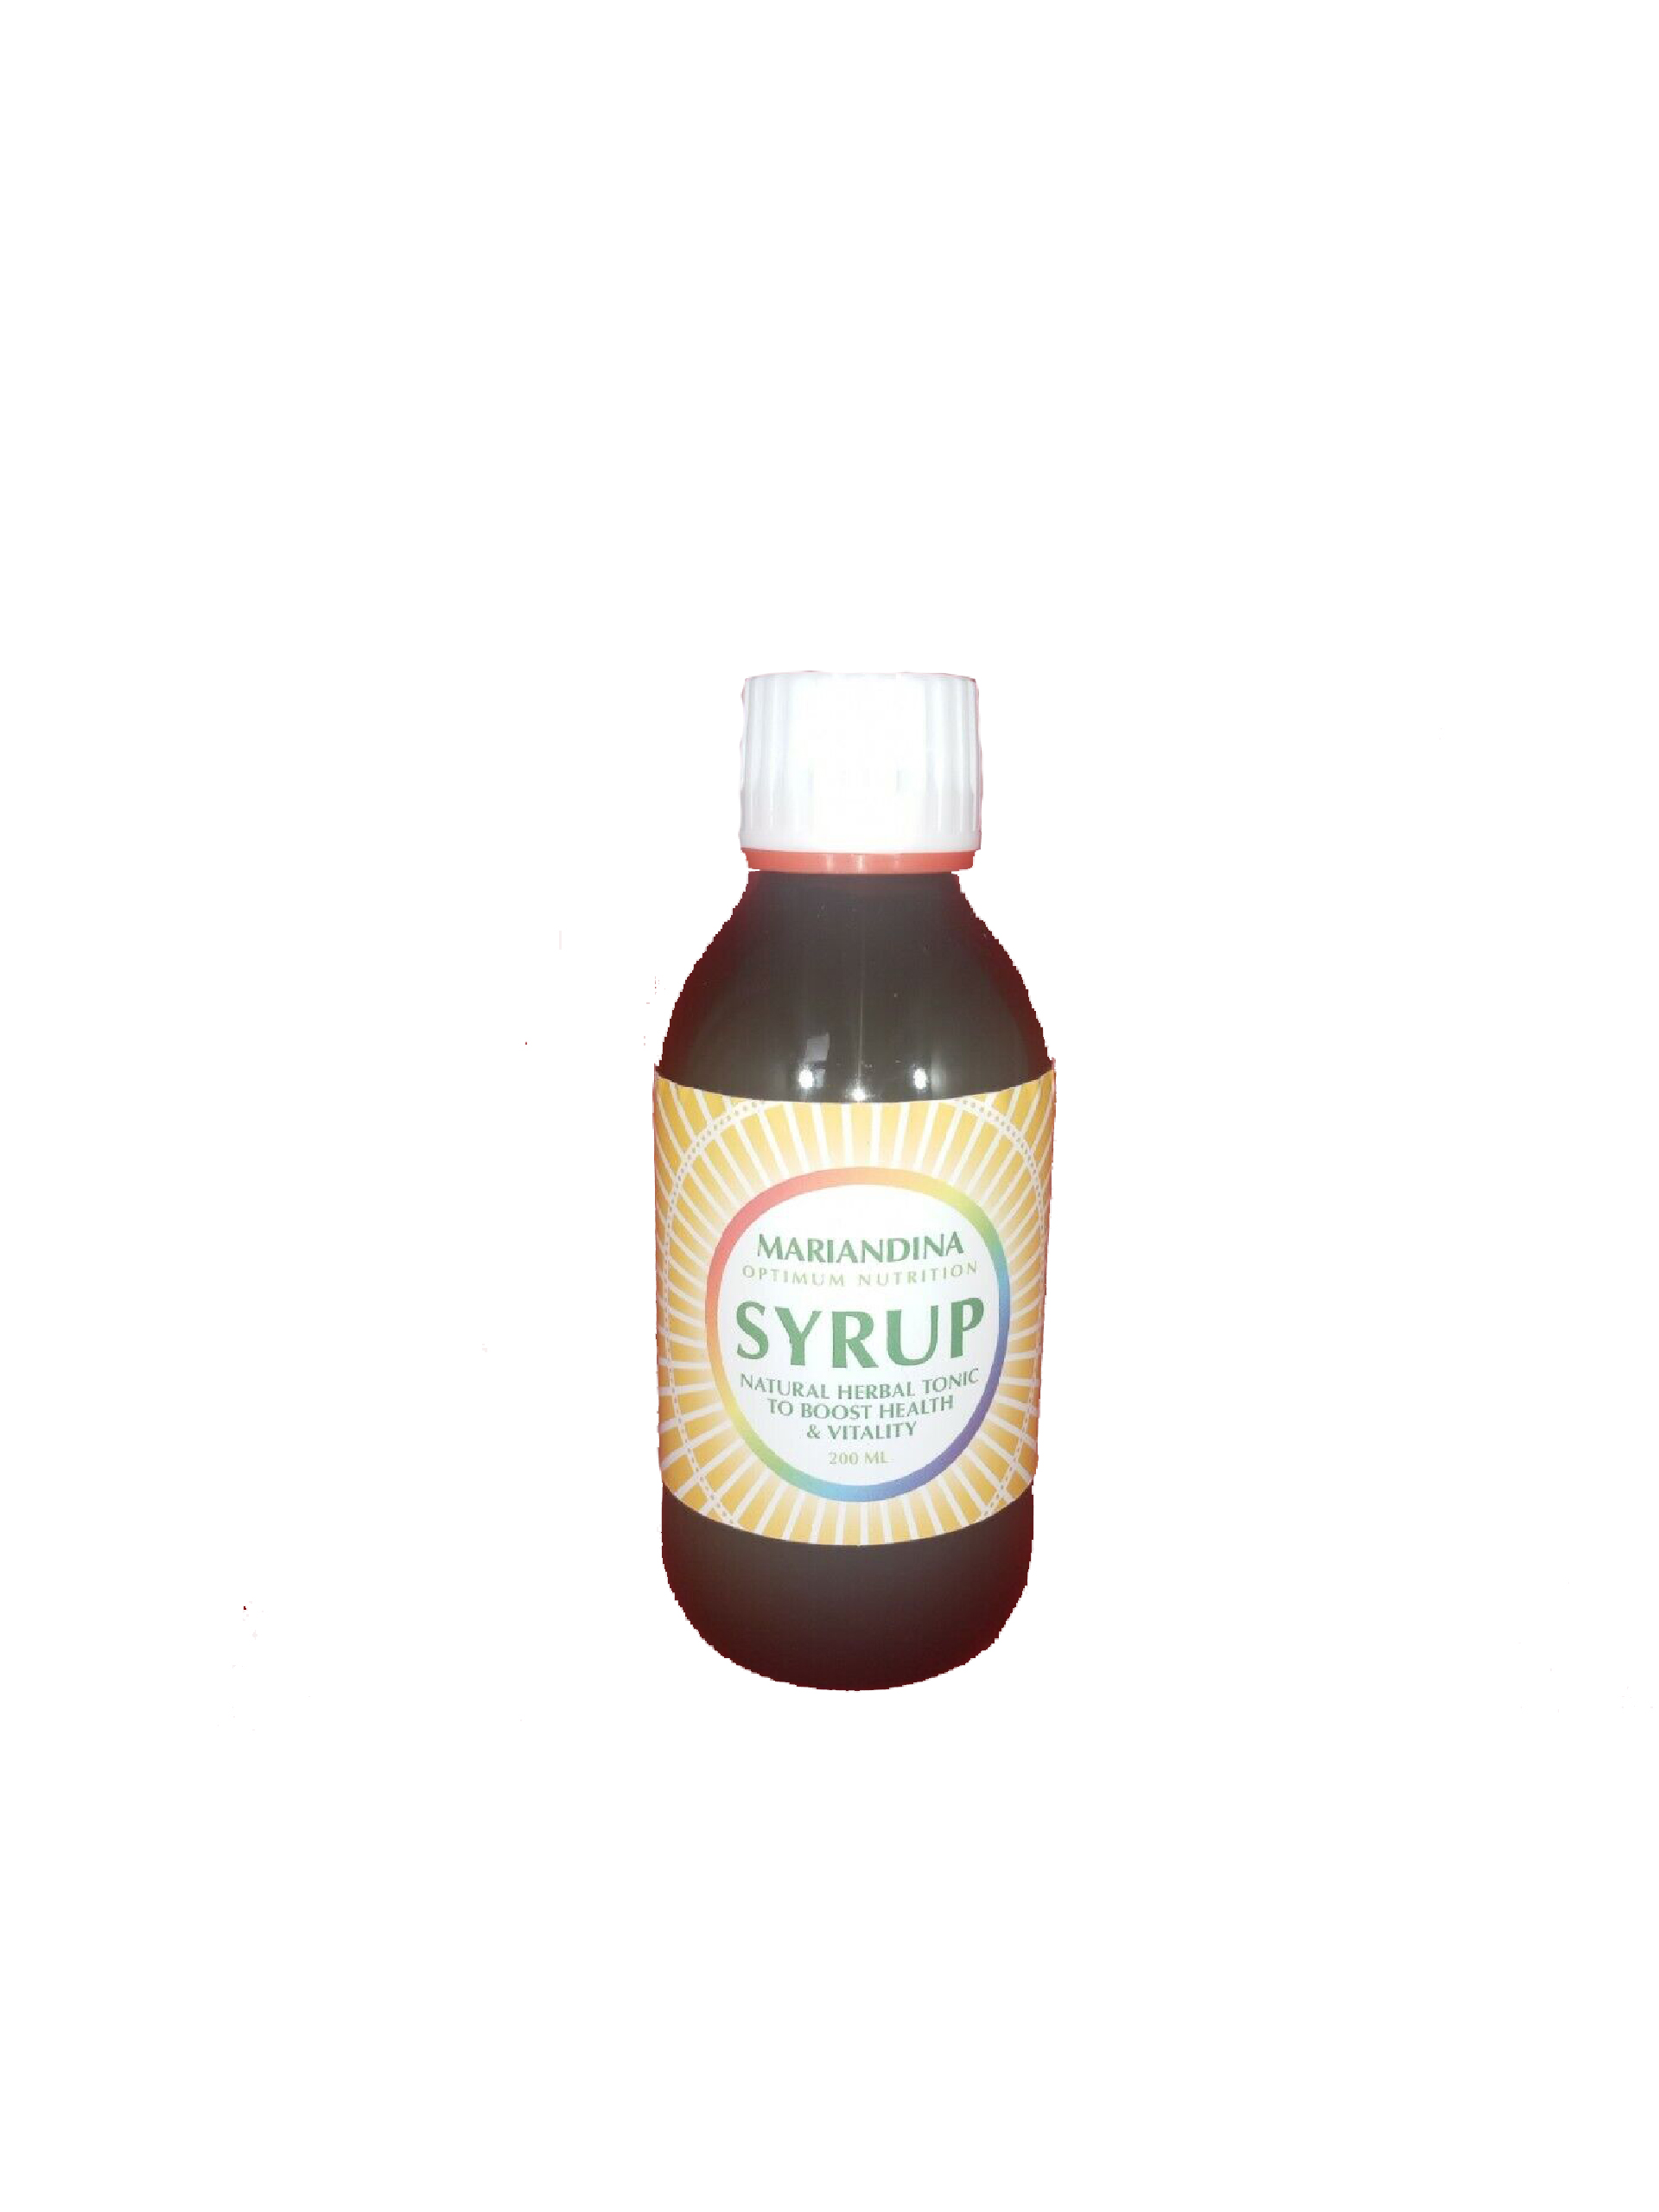 image of mariandina syrup